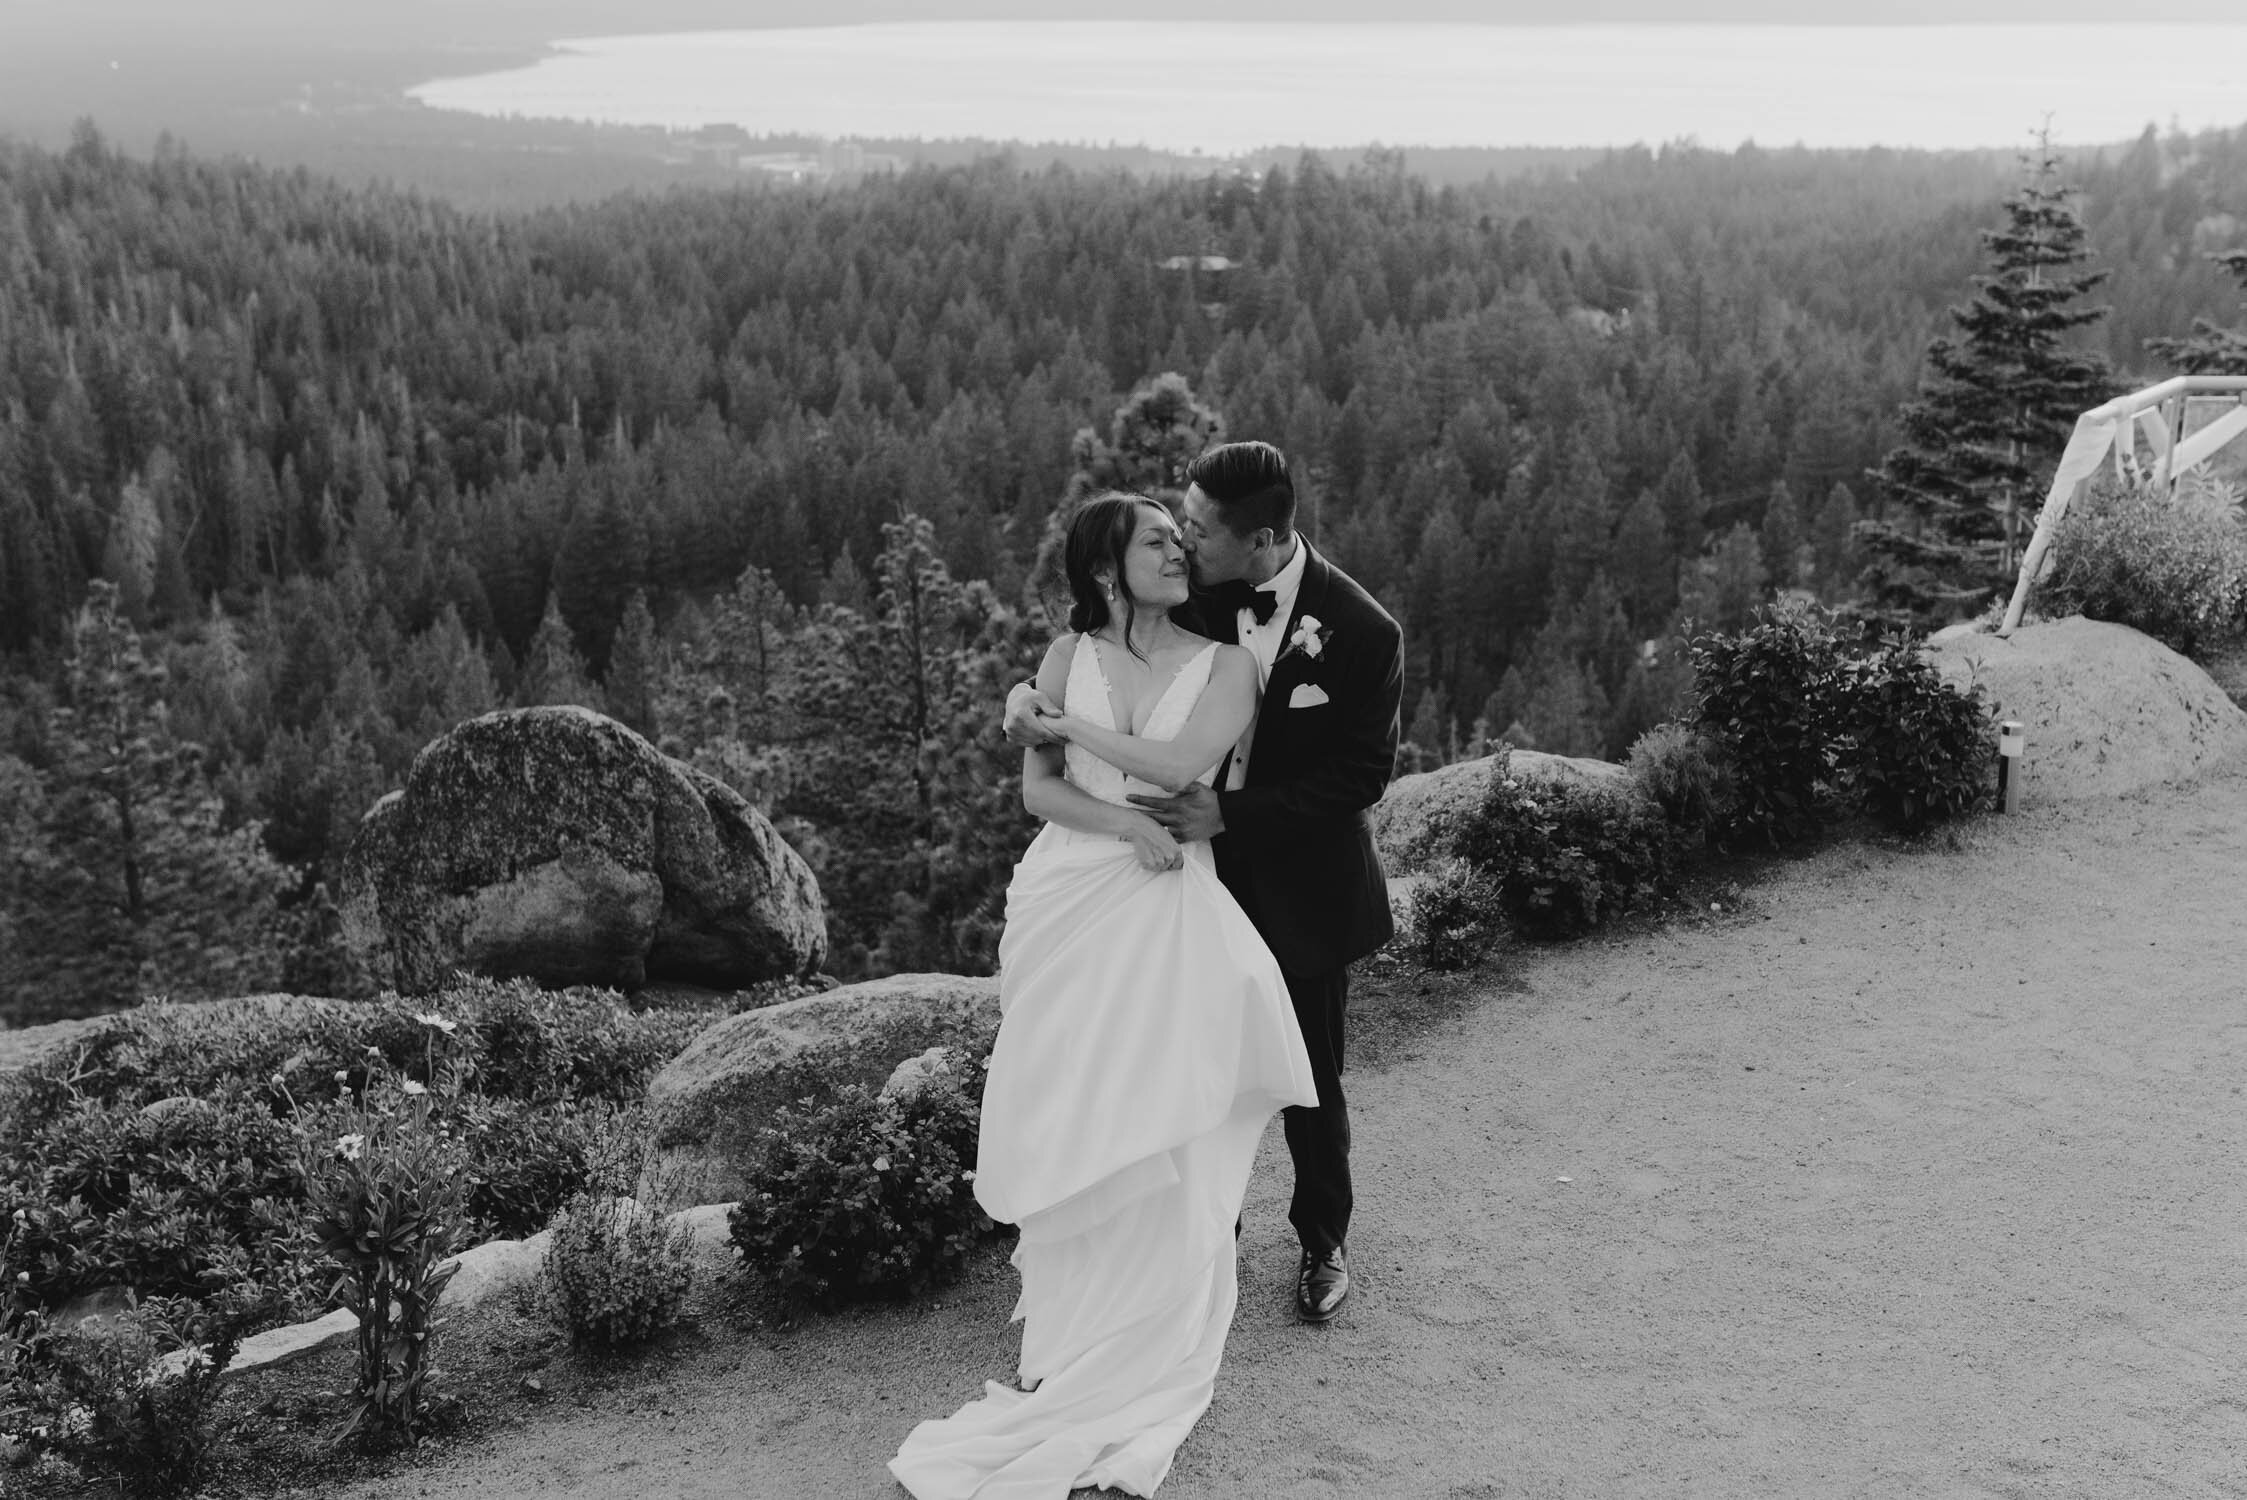 Tahoe Blue estate wedding photography, photo of couple dancing